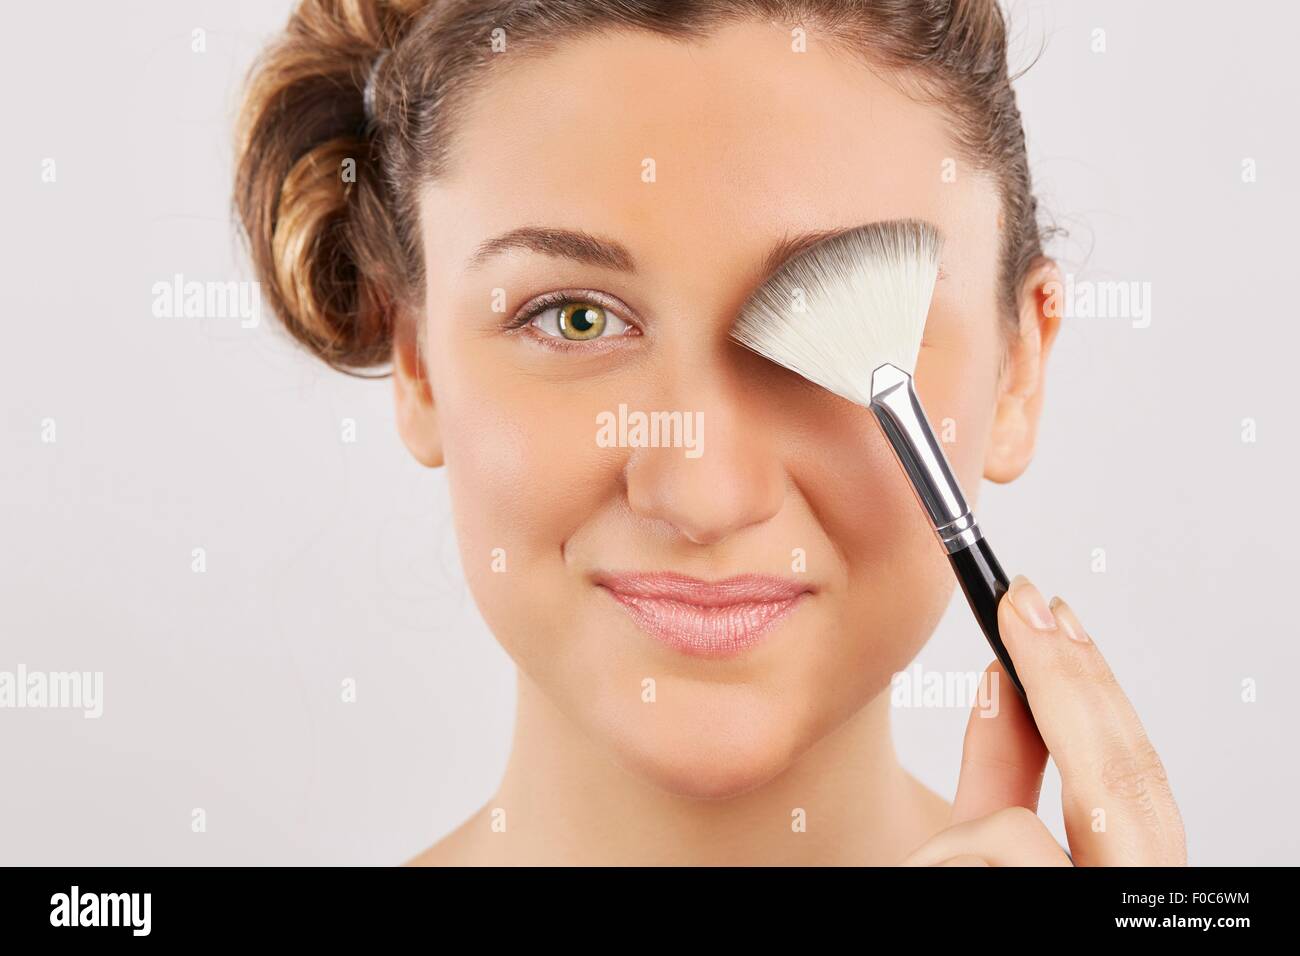 Young woman applying make-up Stock Photo